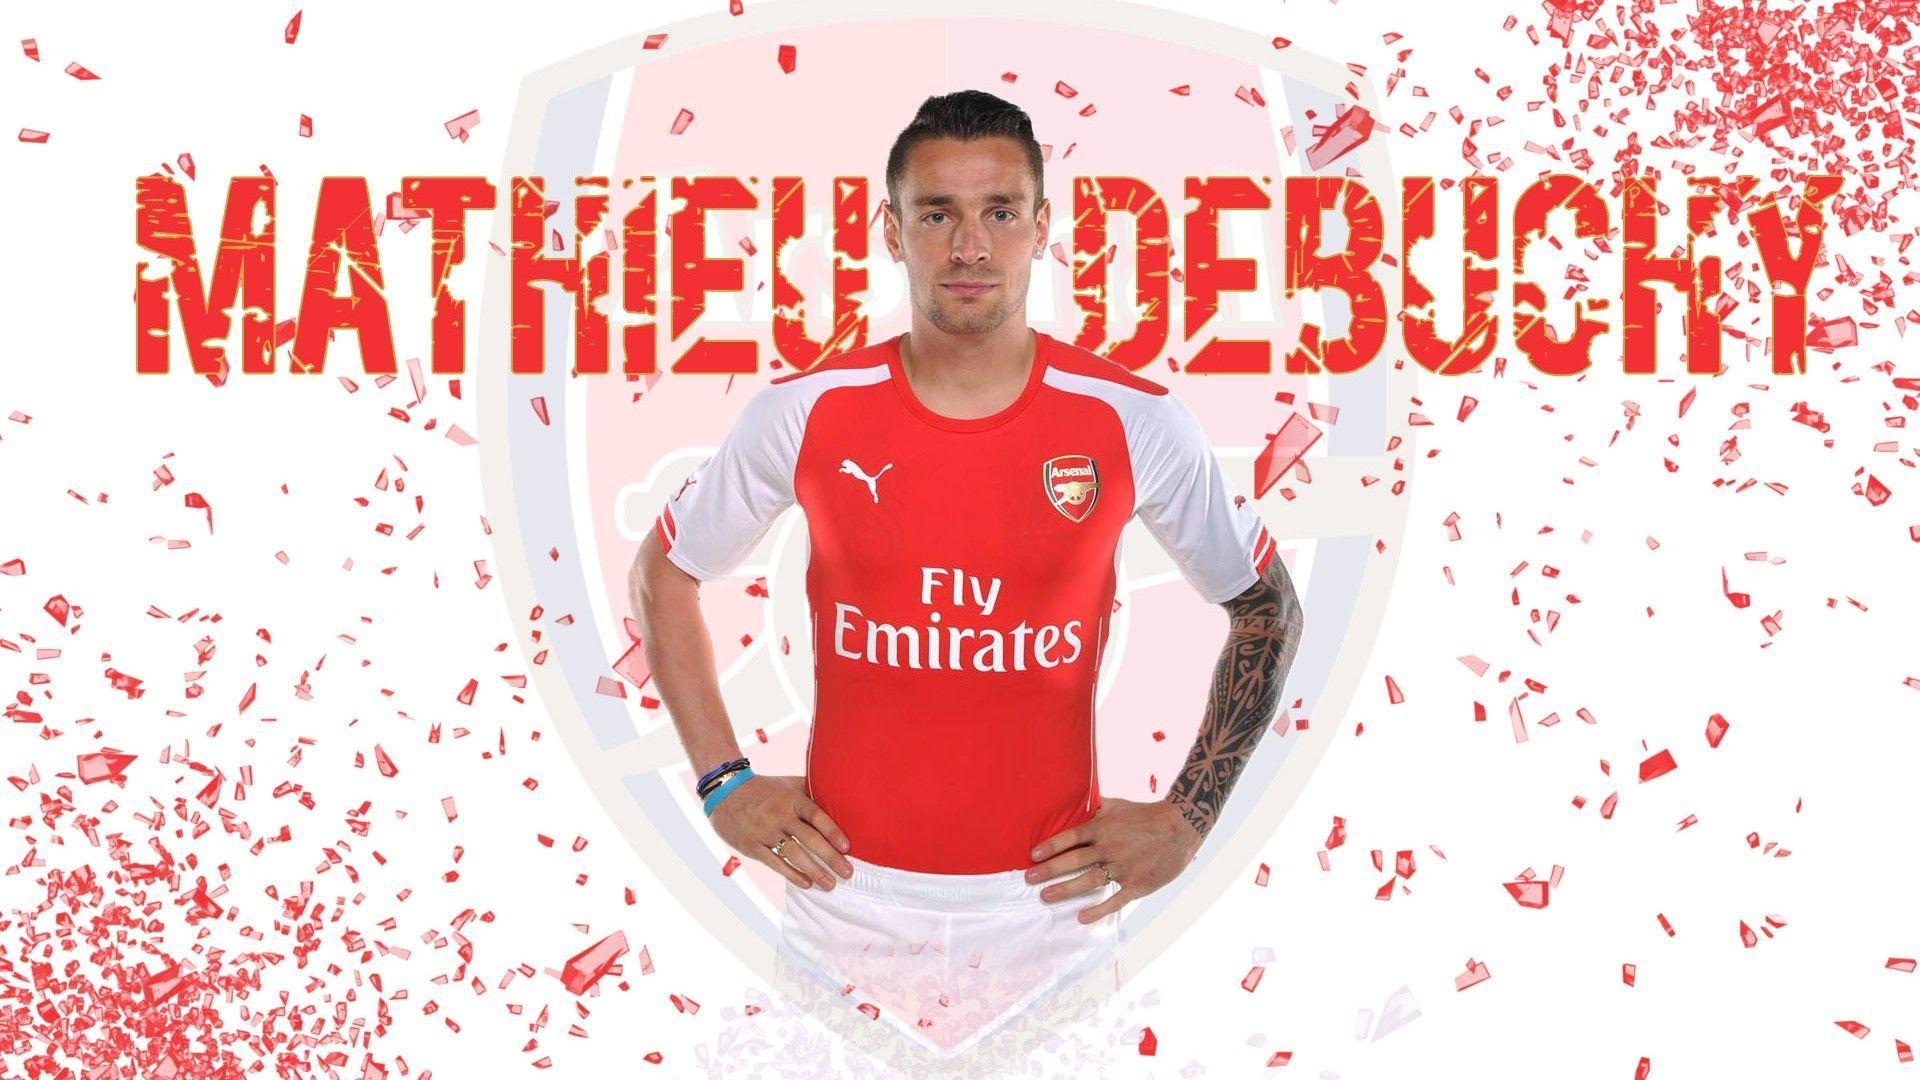 Mathieu Debuchy 2014 Arsenal FC Wallpaper Wide or HD. Male